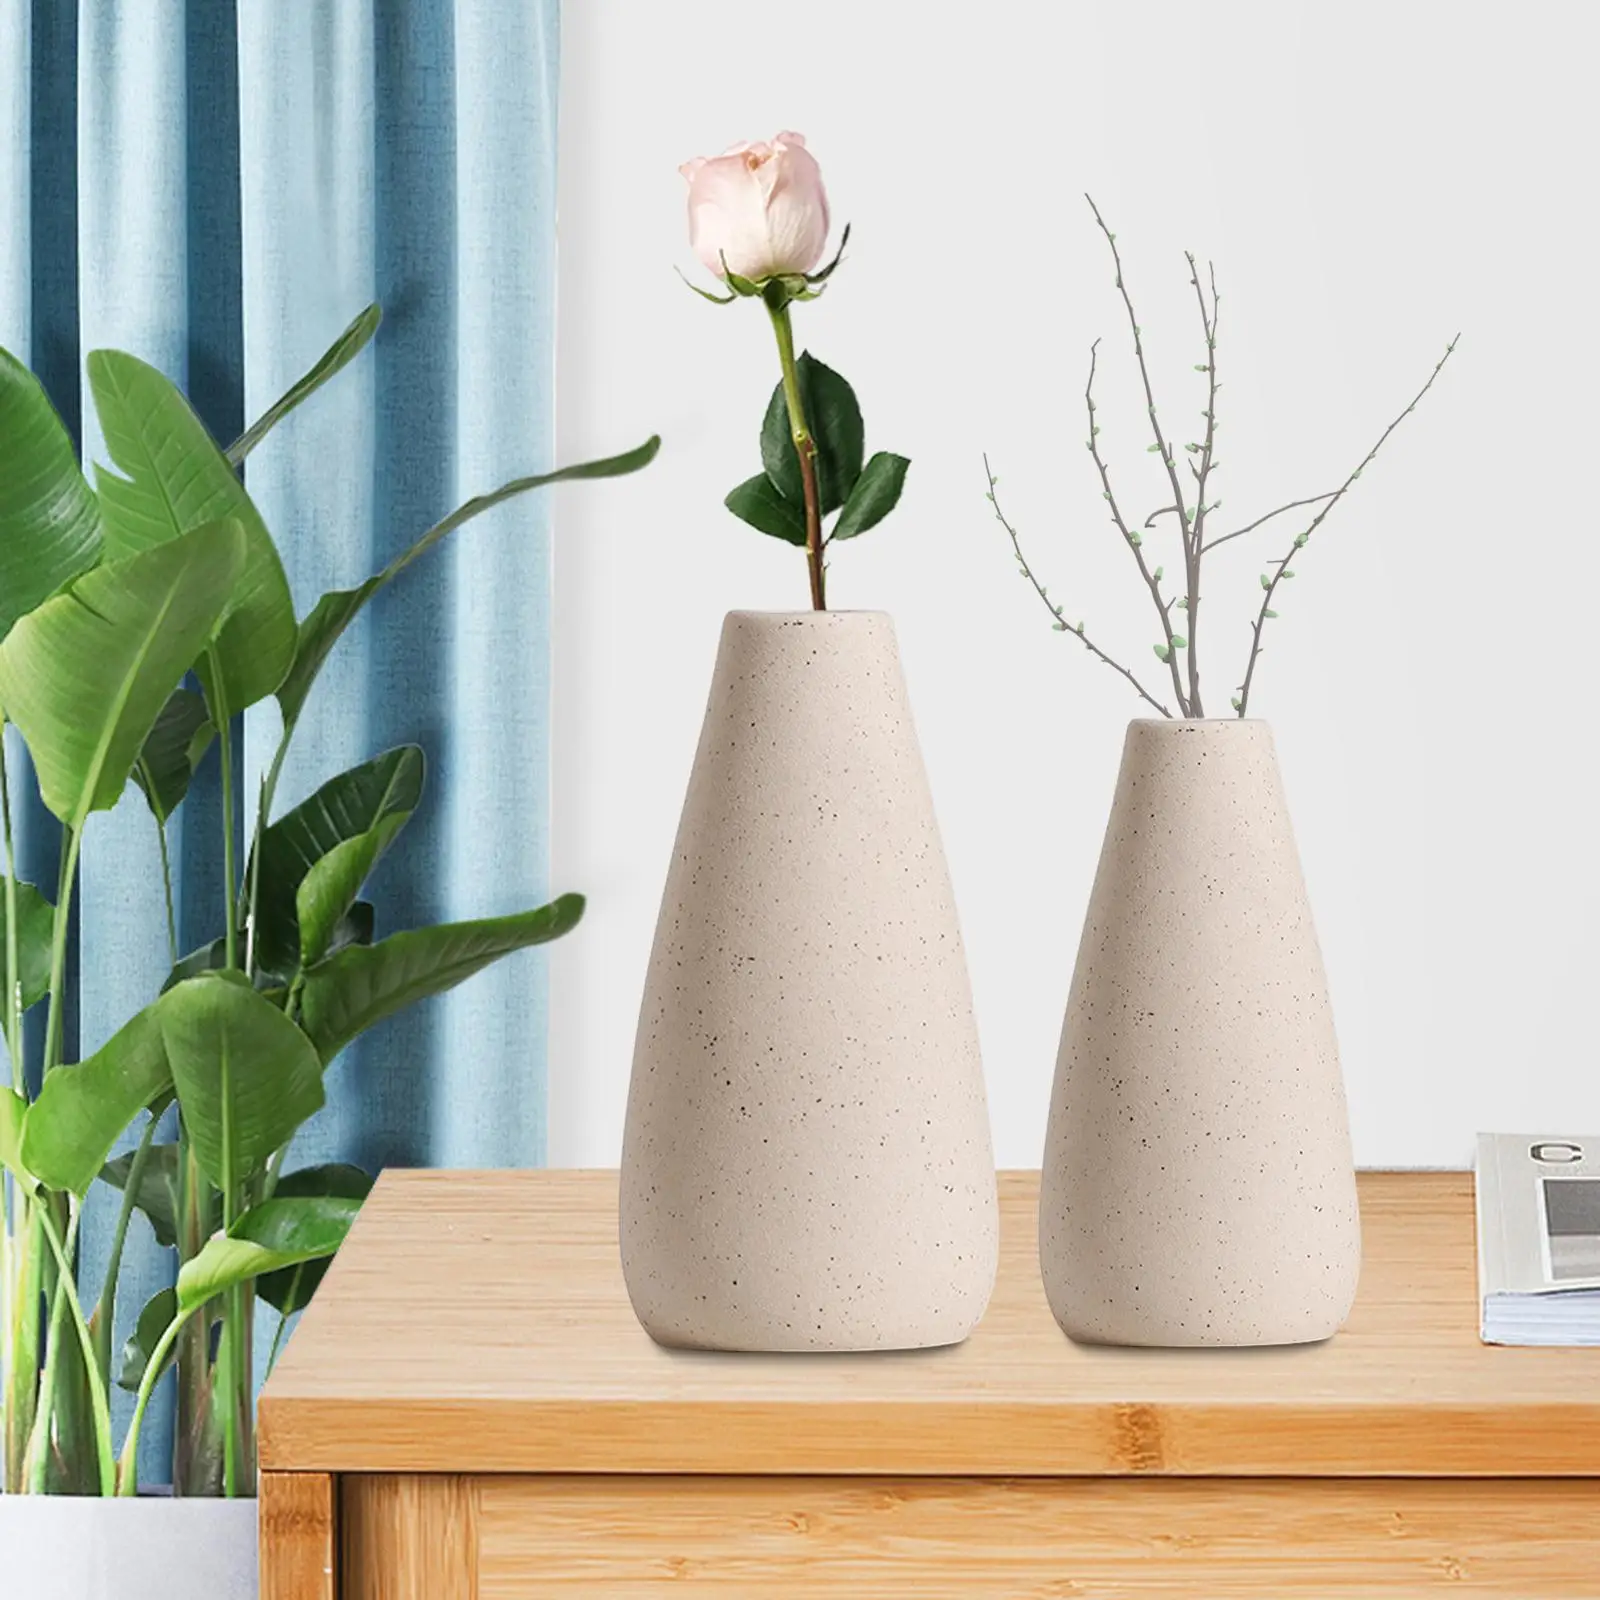 Ceramic Flower Vase Flower Arrangements Flower Pot Table Centerpiece Collection Desktop Vase for Entryway Bookshelf Kitchen Home